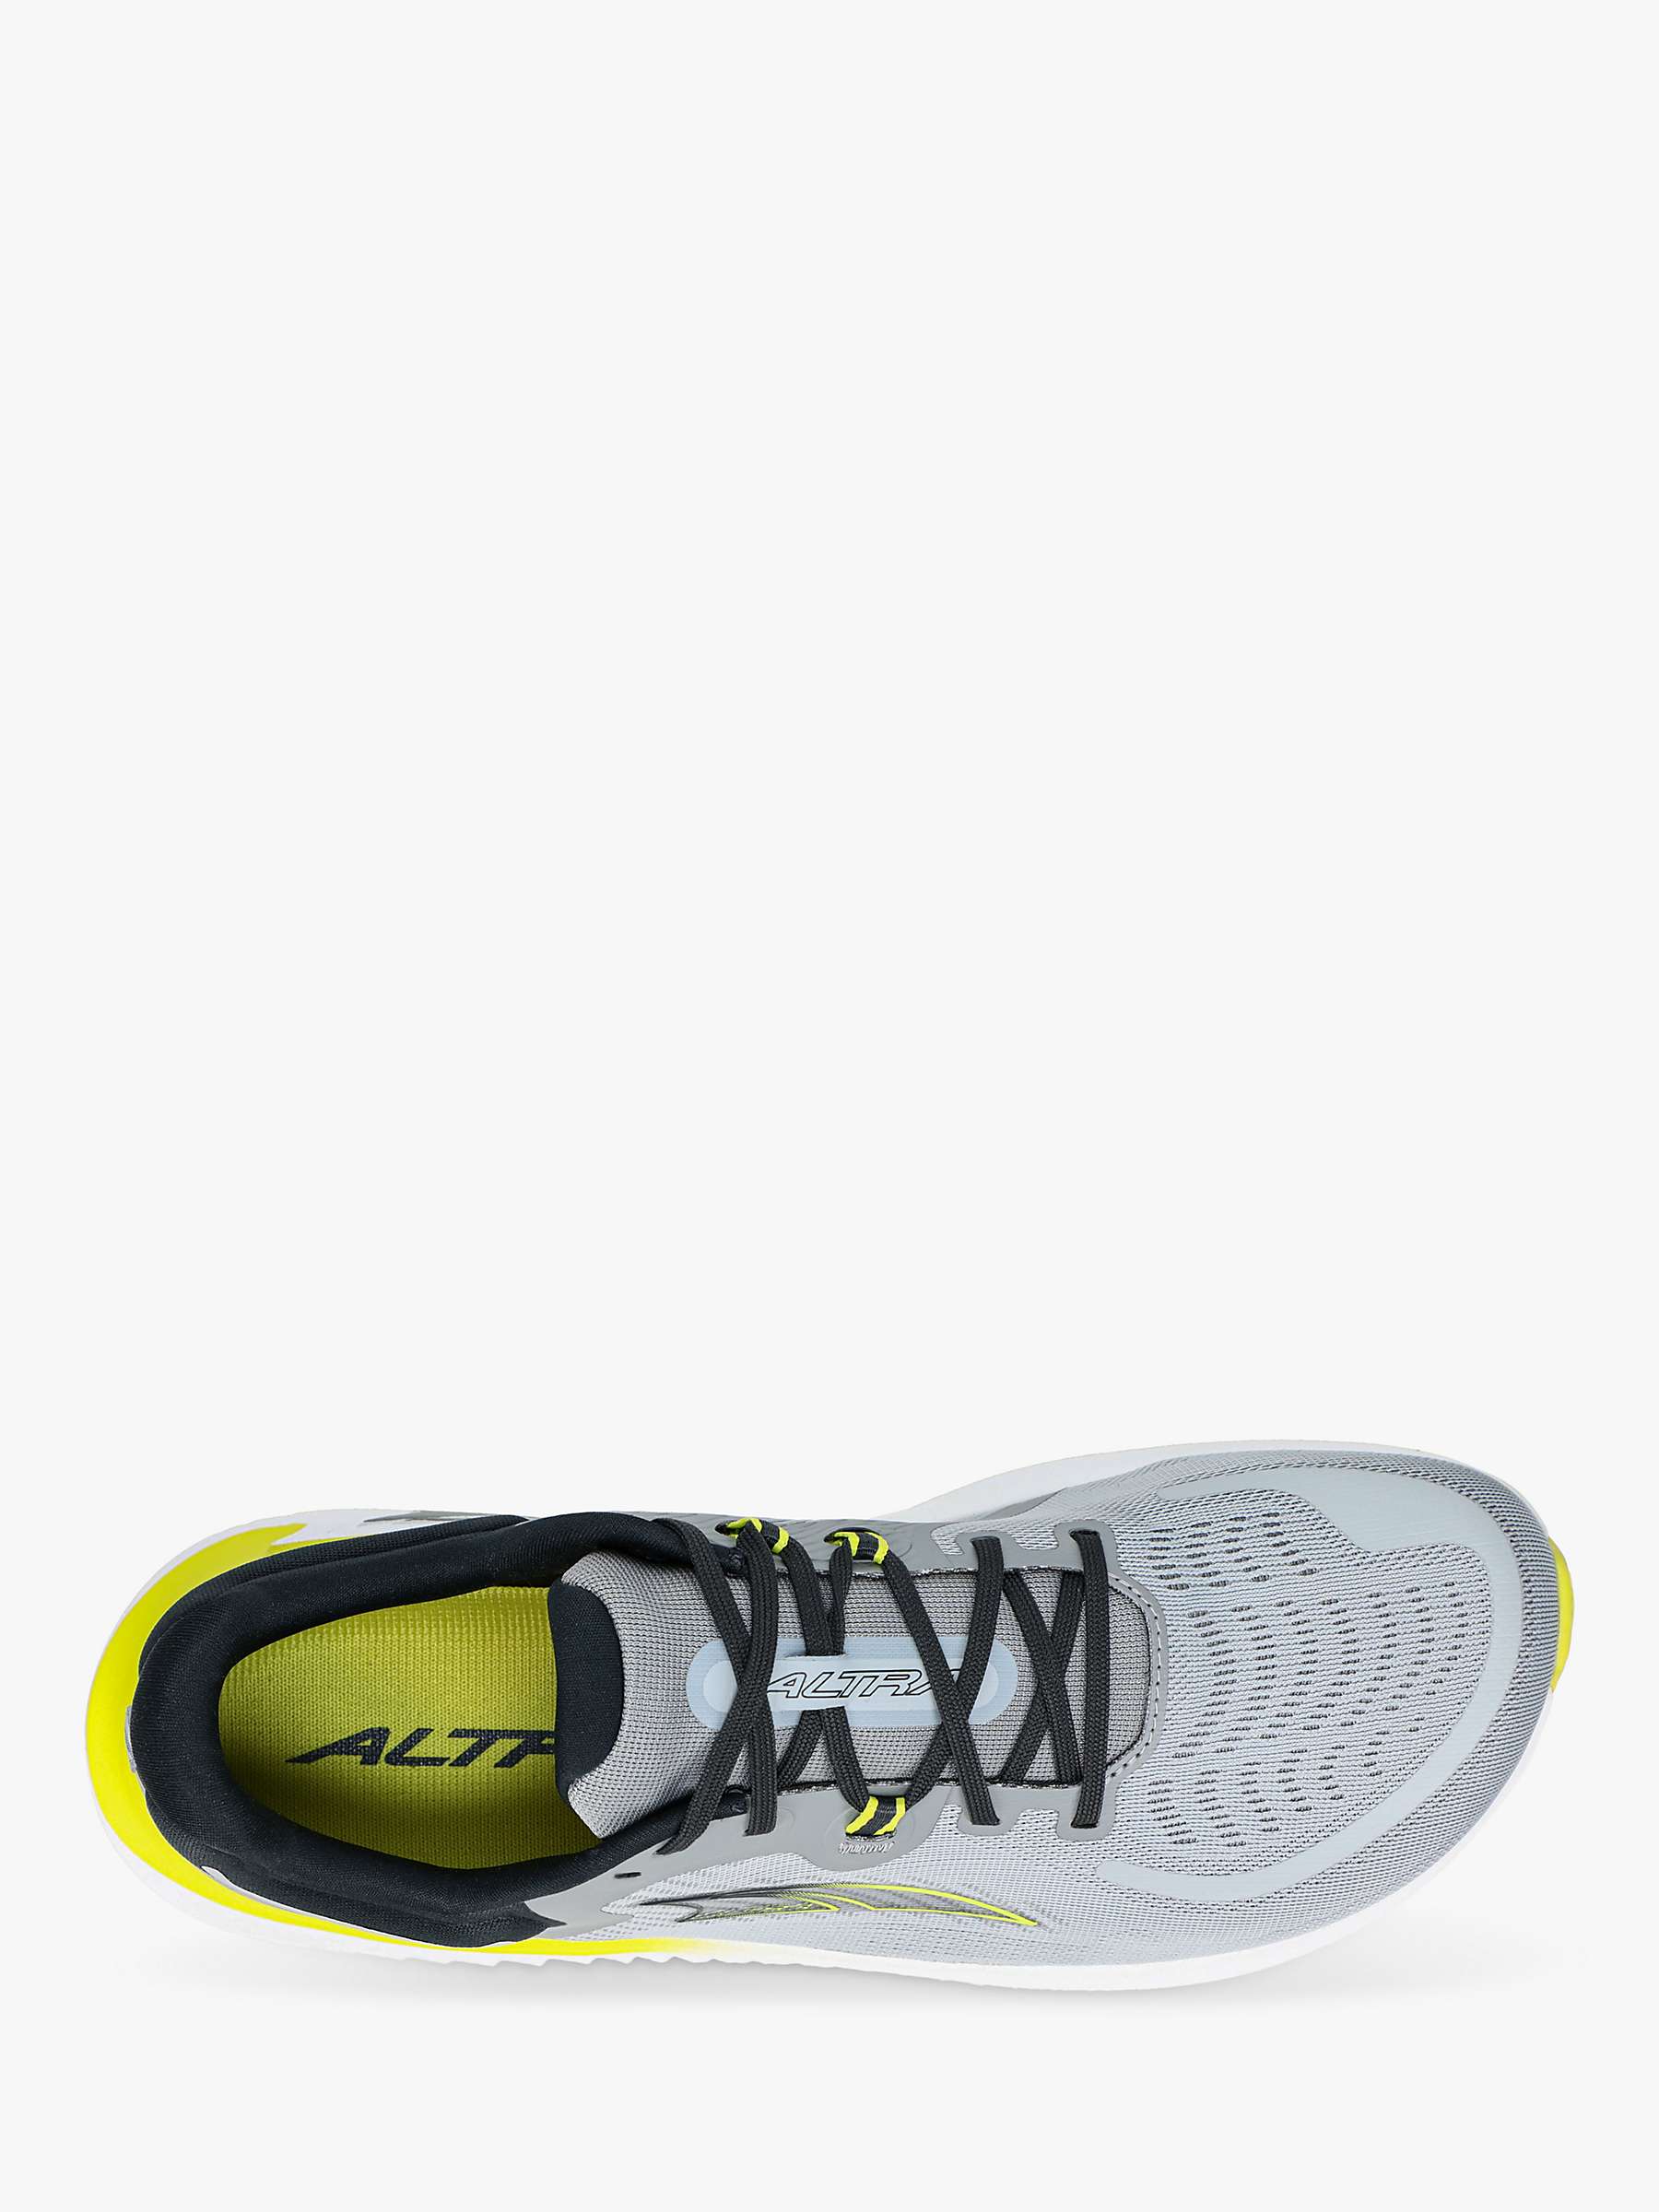 Buy Altra Paradigm 6 Men's Running Shoes Online at johnlewis.com